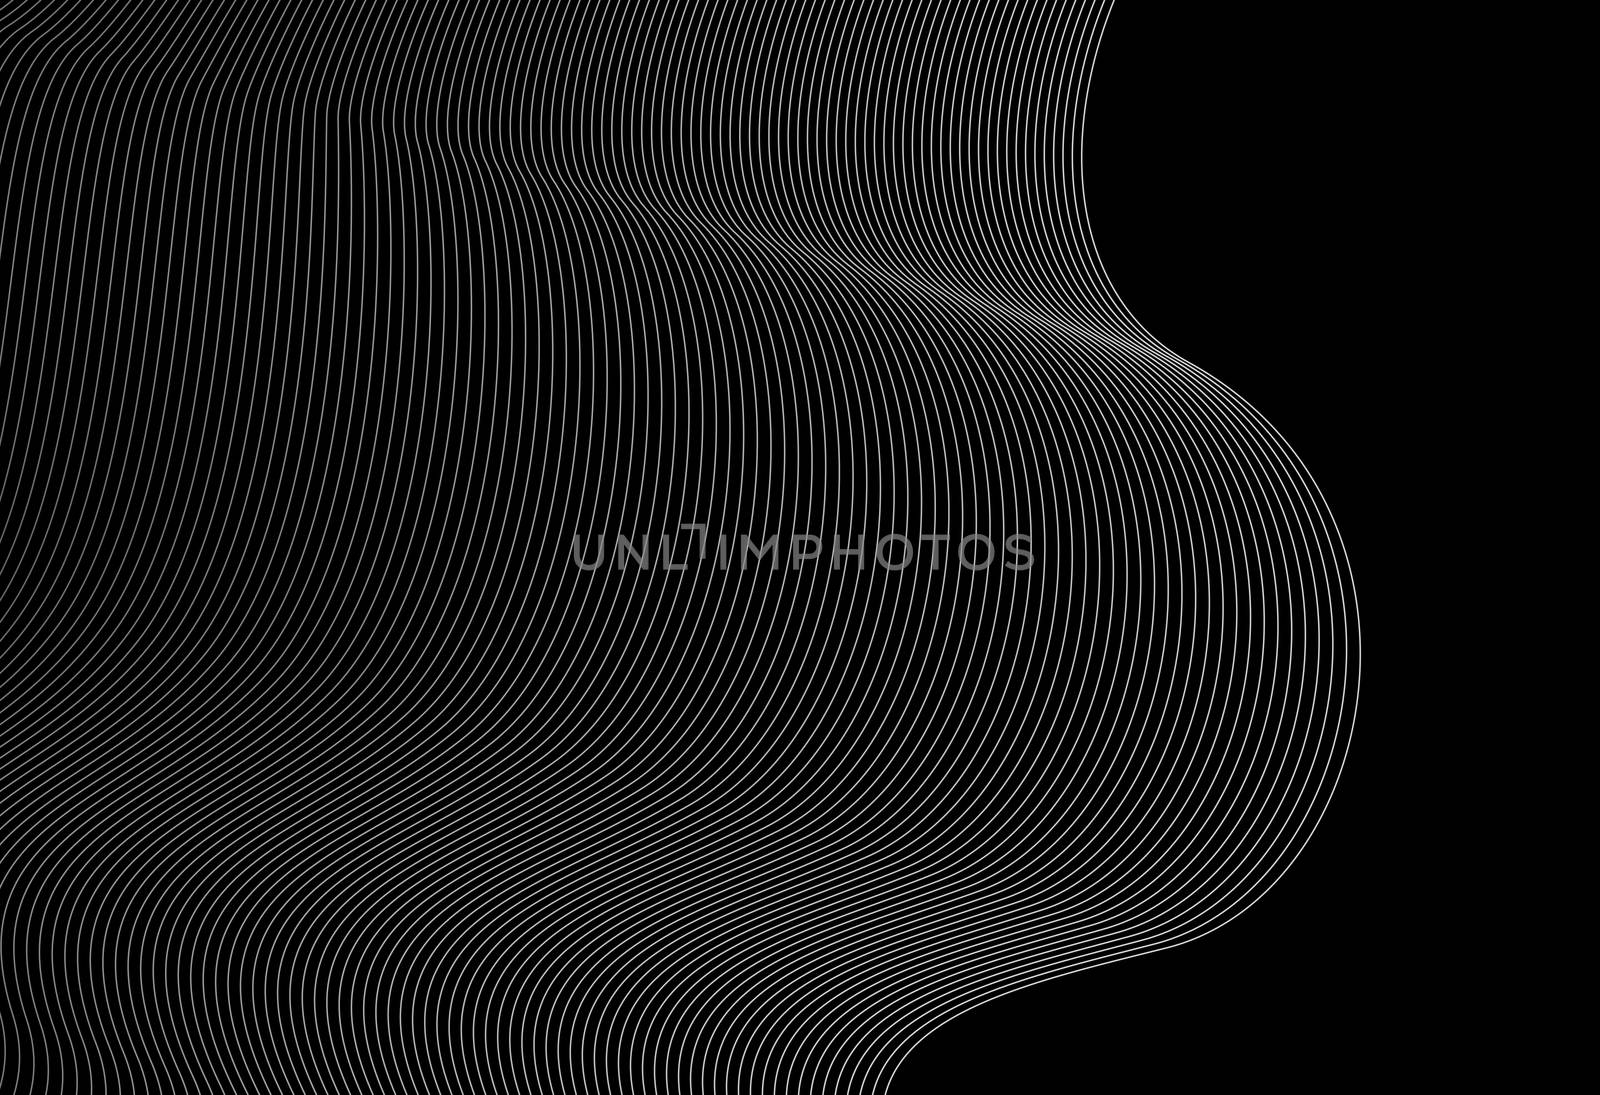 A dark black background with a white curve like a flag